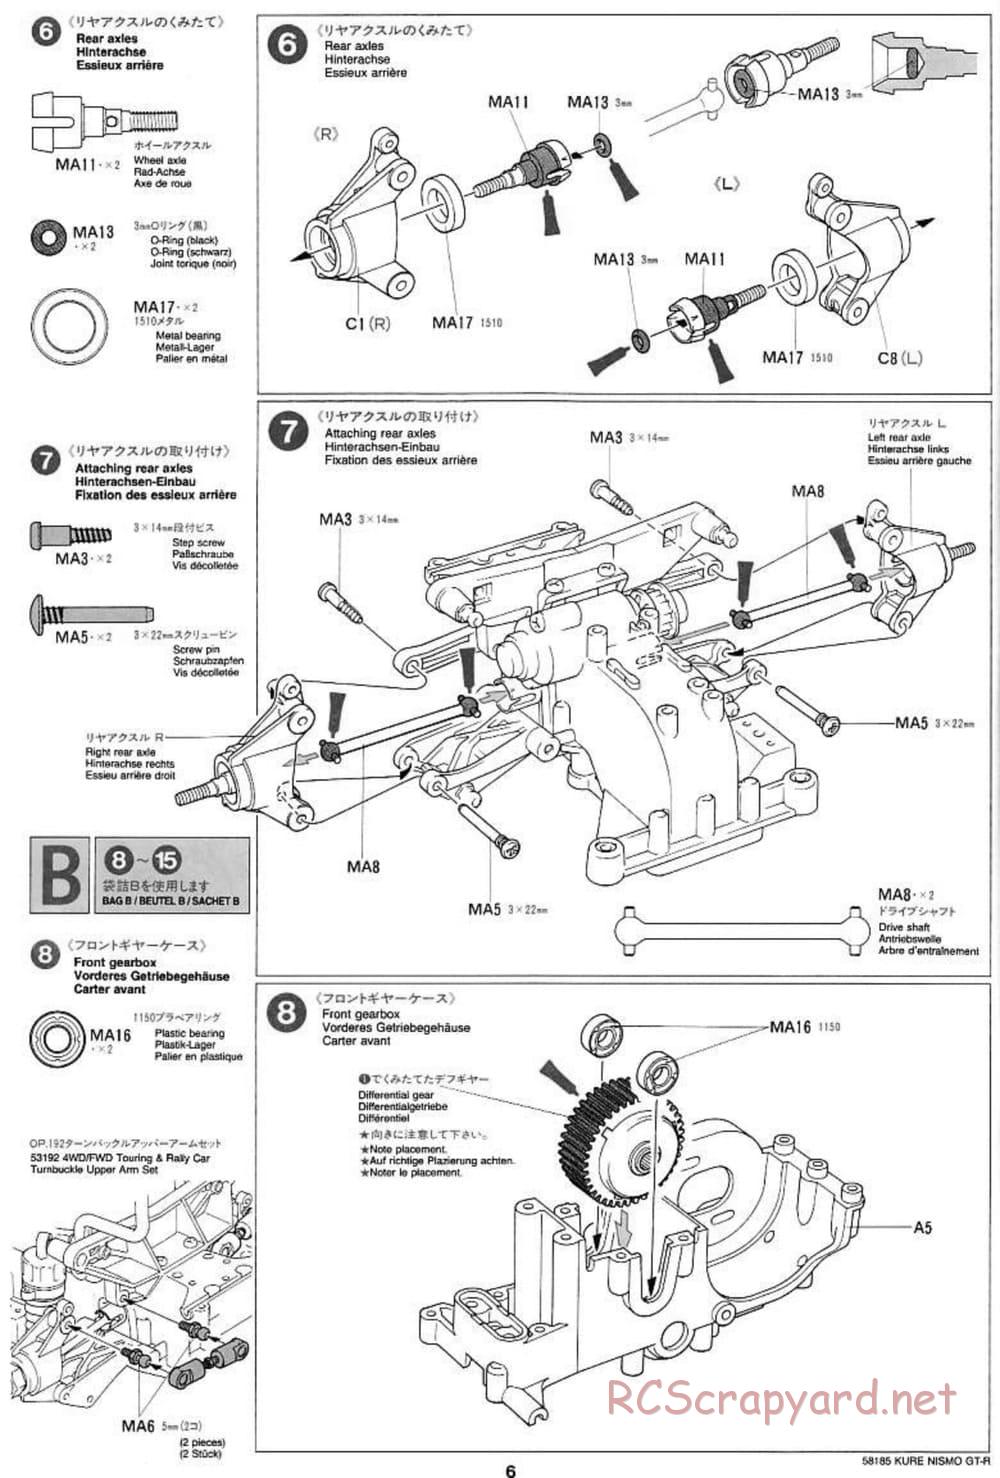 Tamiya - Kure Nismo GT-R - TA-03F Chassis - Manual - Page 6